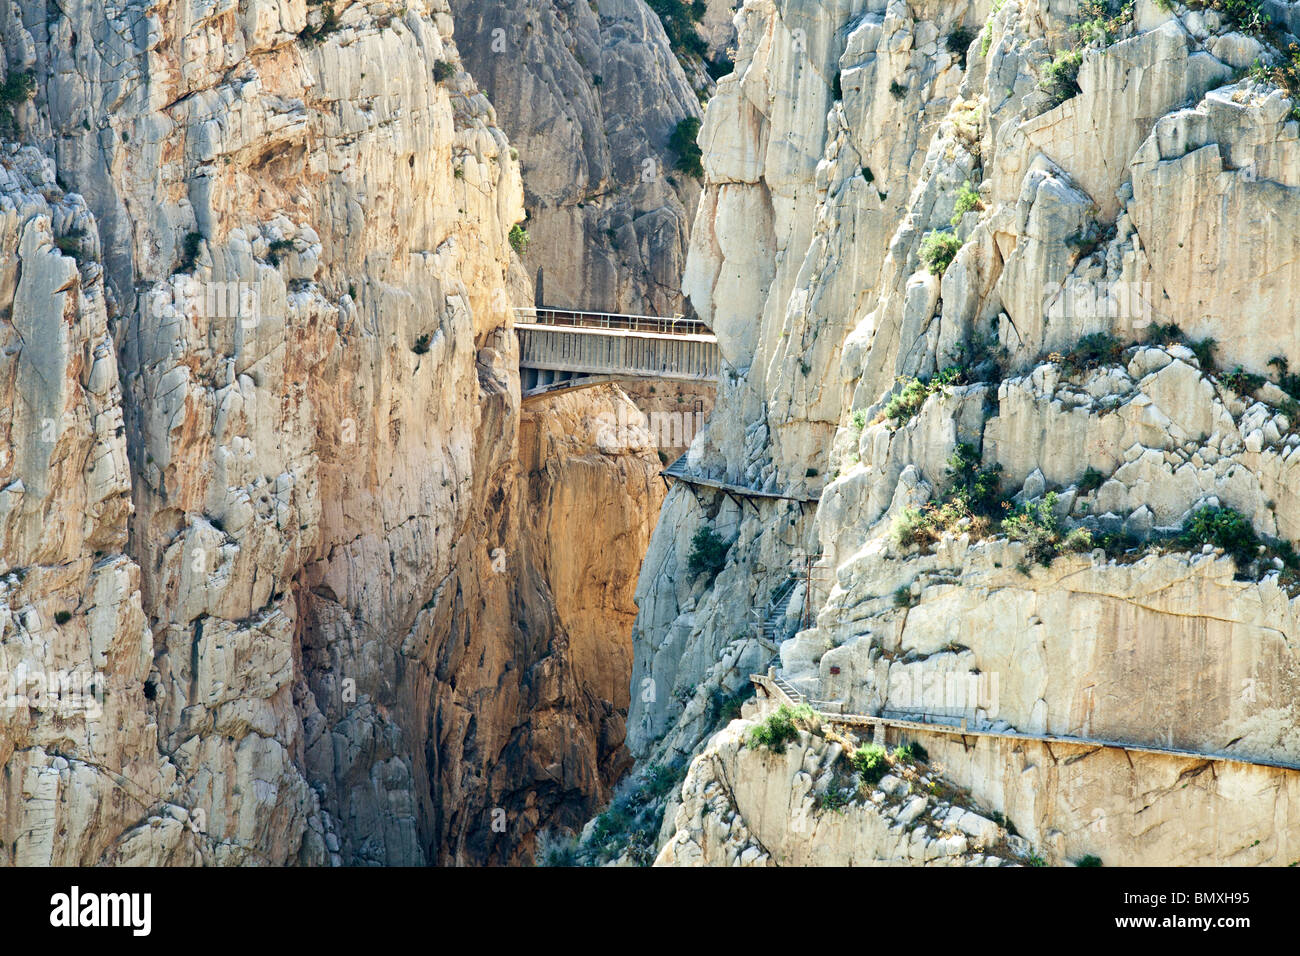 Camino del Rey gorge in El Chorro, Andalusia, Spain Stock Photo